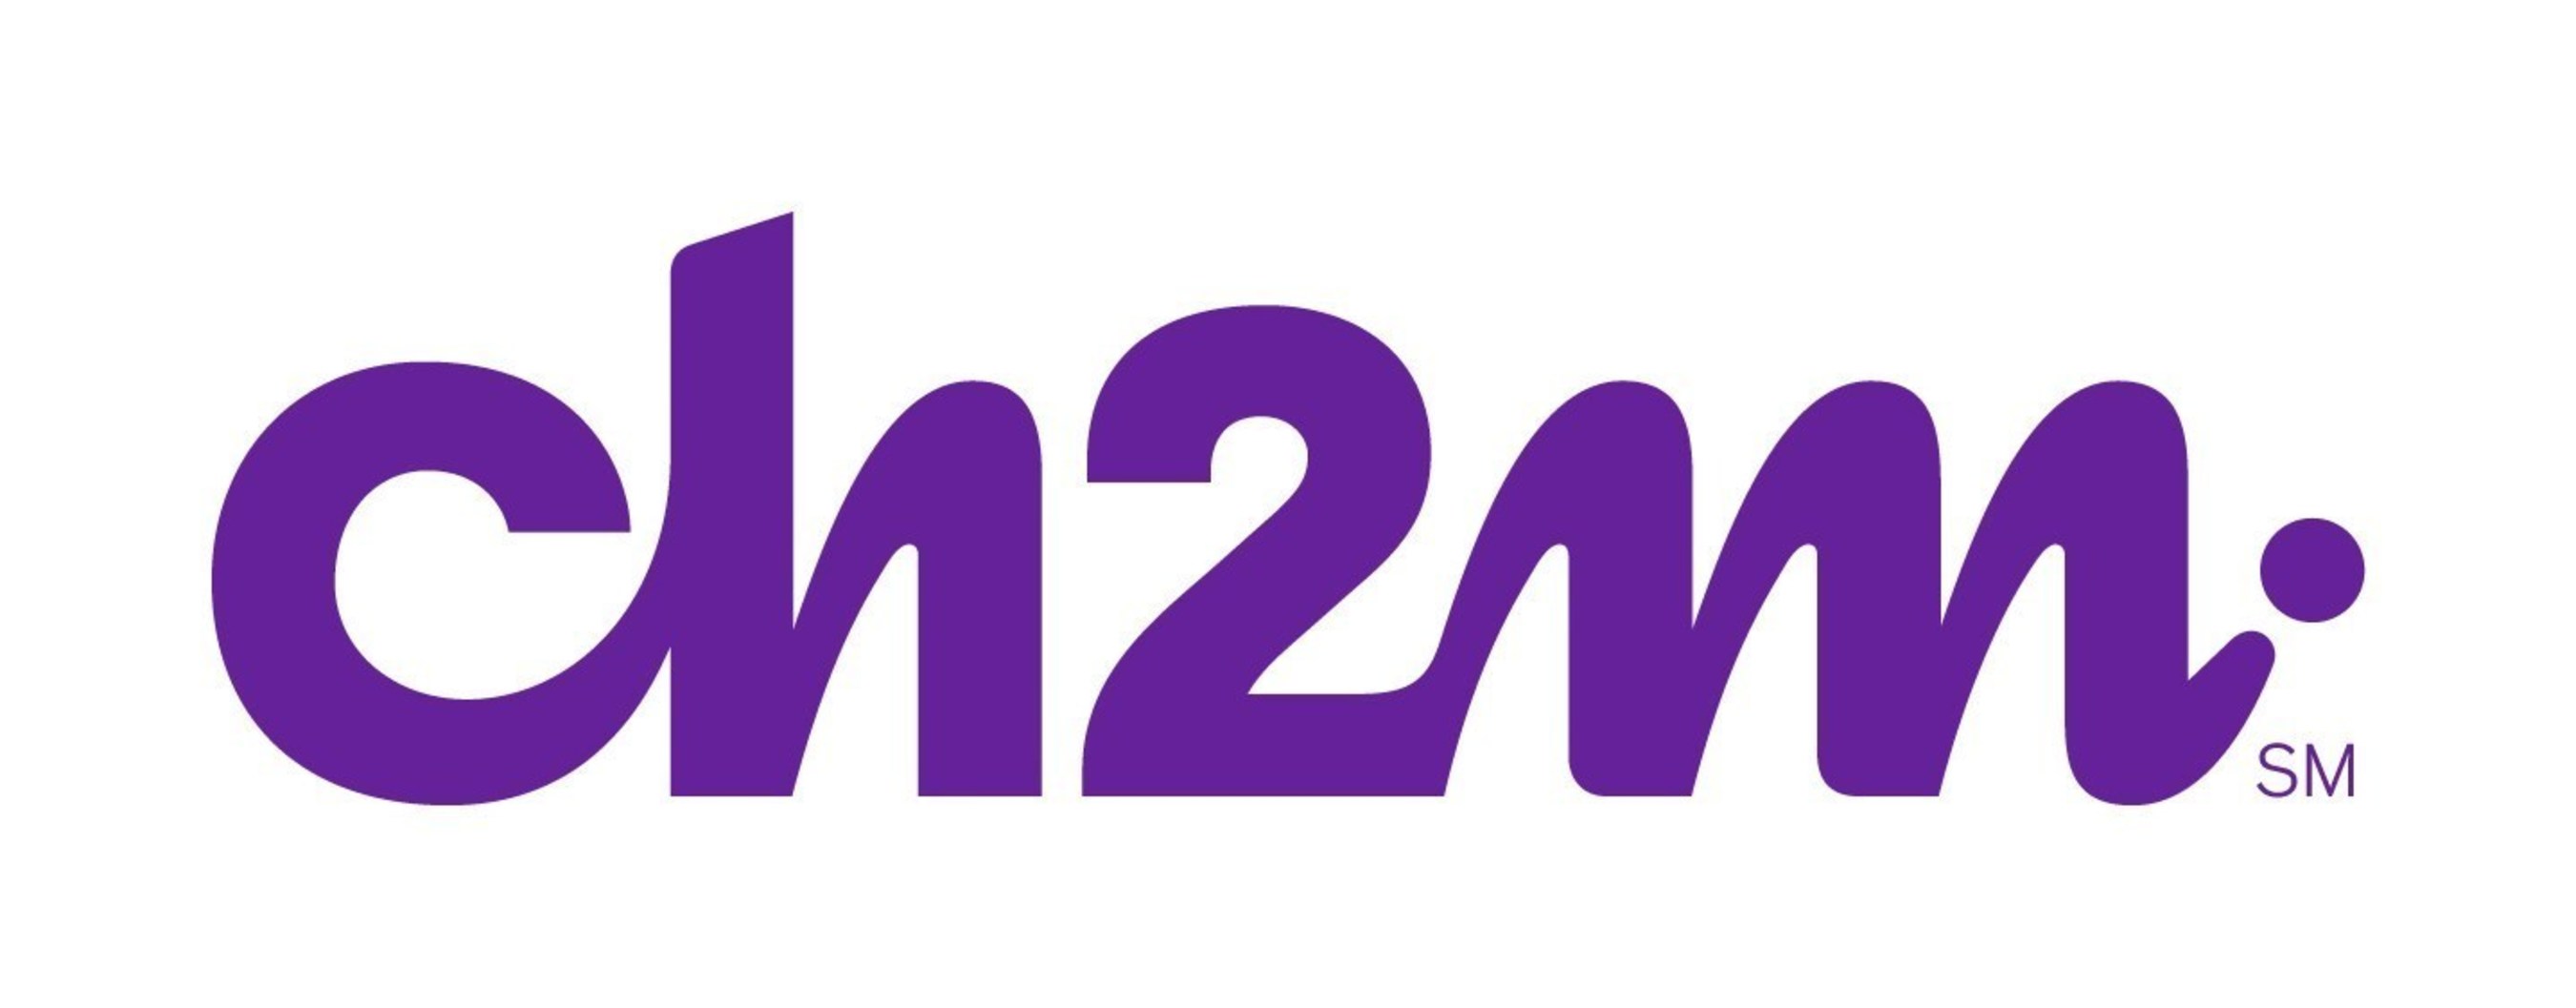 CH2M logo